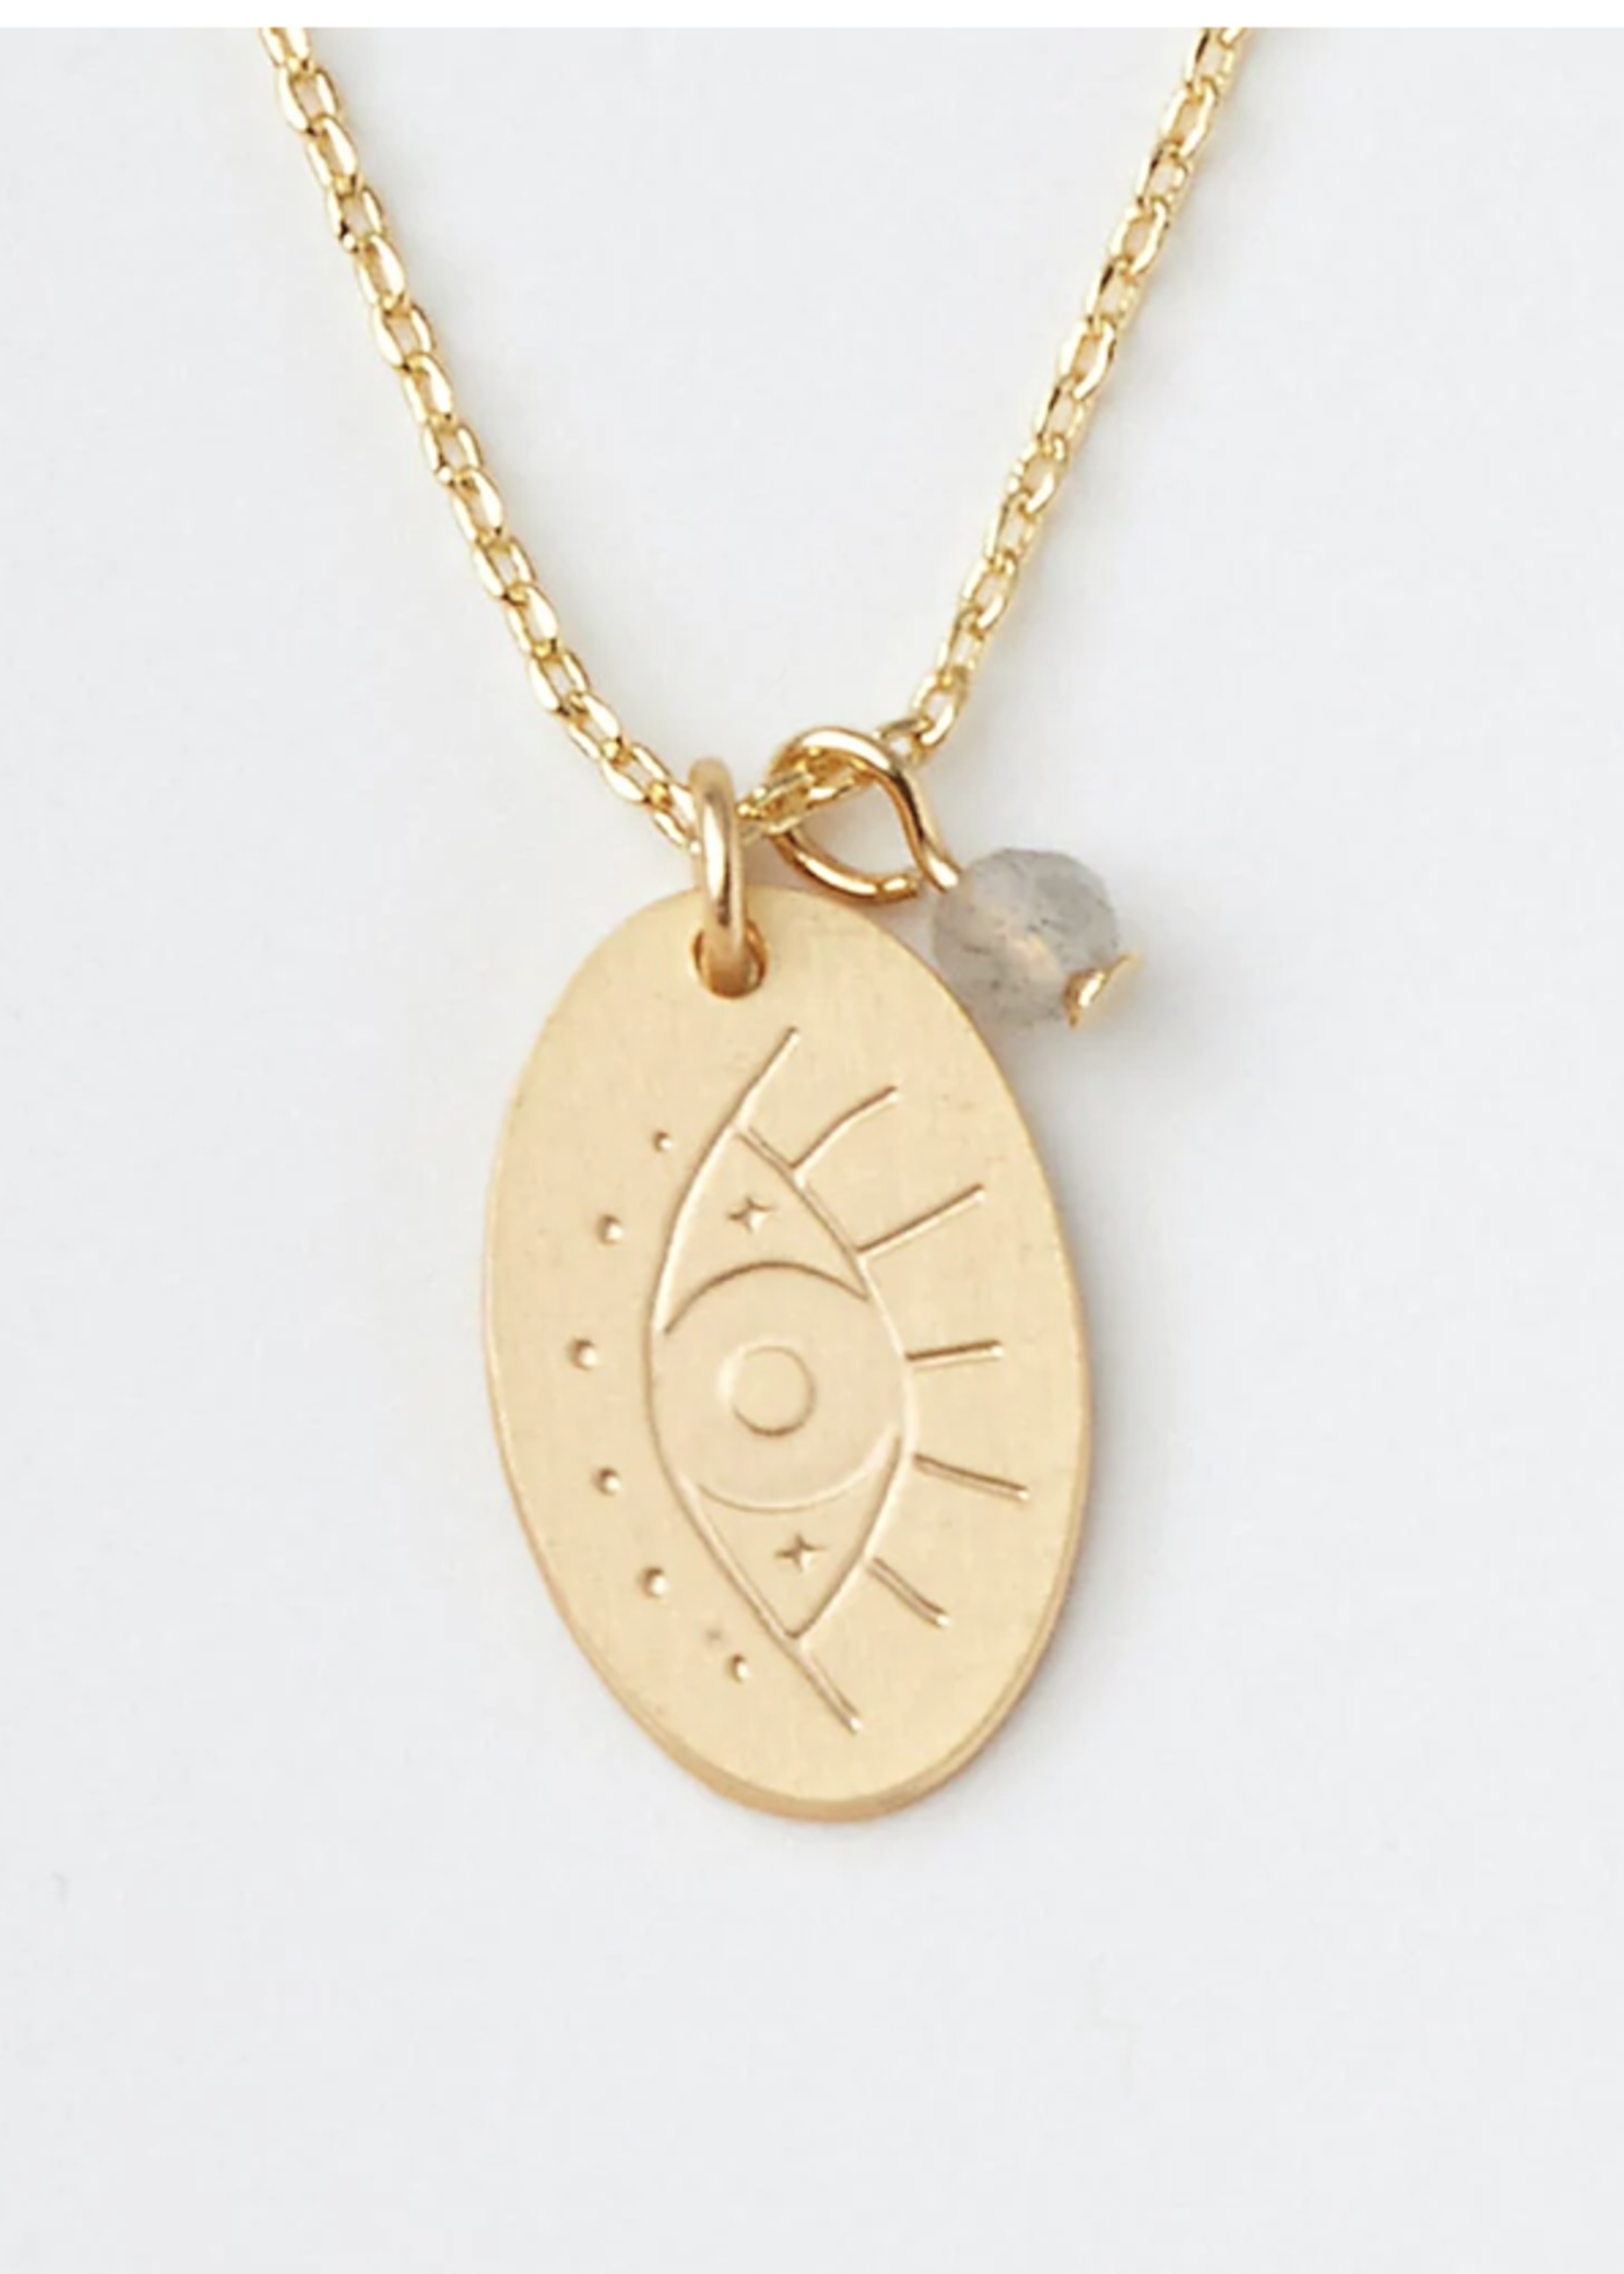 Intention Charm Necklace - Labradorite/Gold